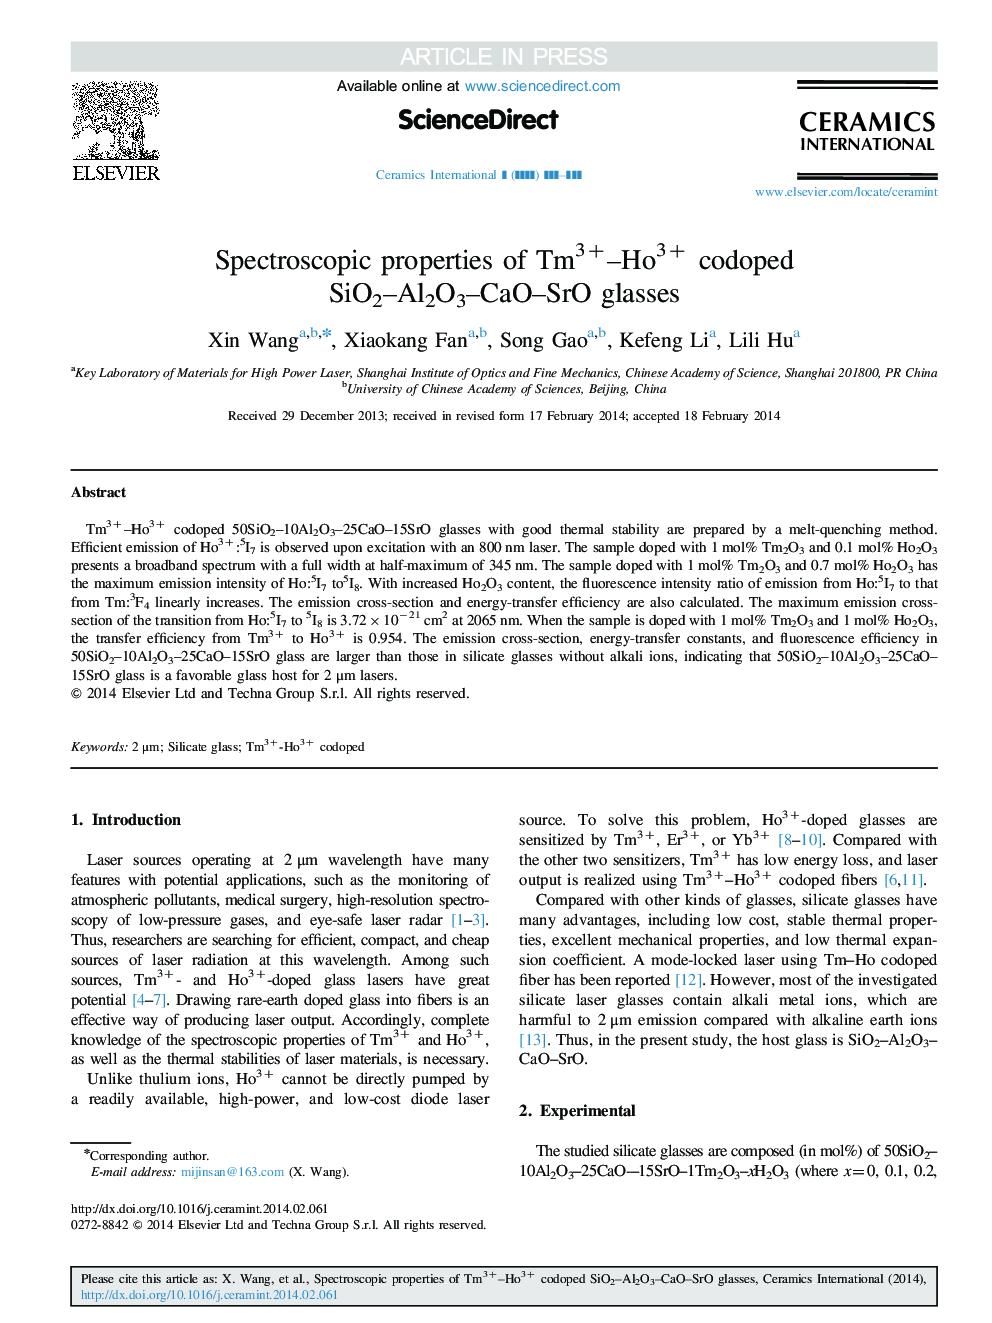 Spectroscopic properties of Tm3+-Ho3+ codoped SiO2-Al2O3-CaO-SrO glasses